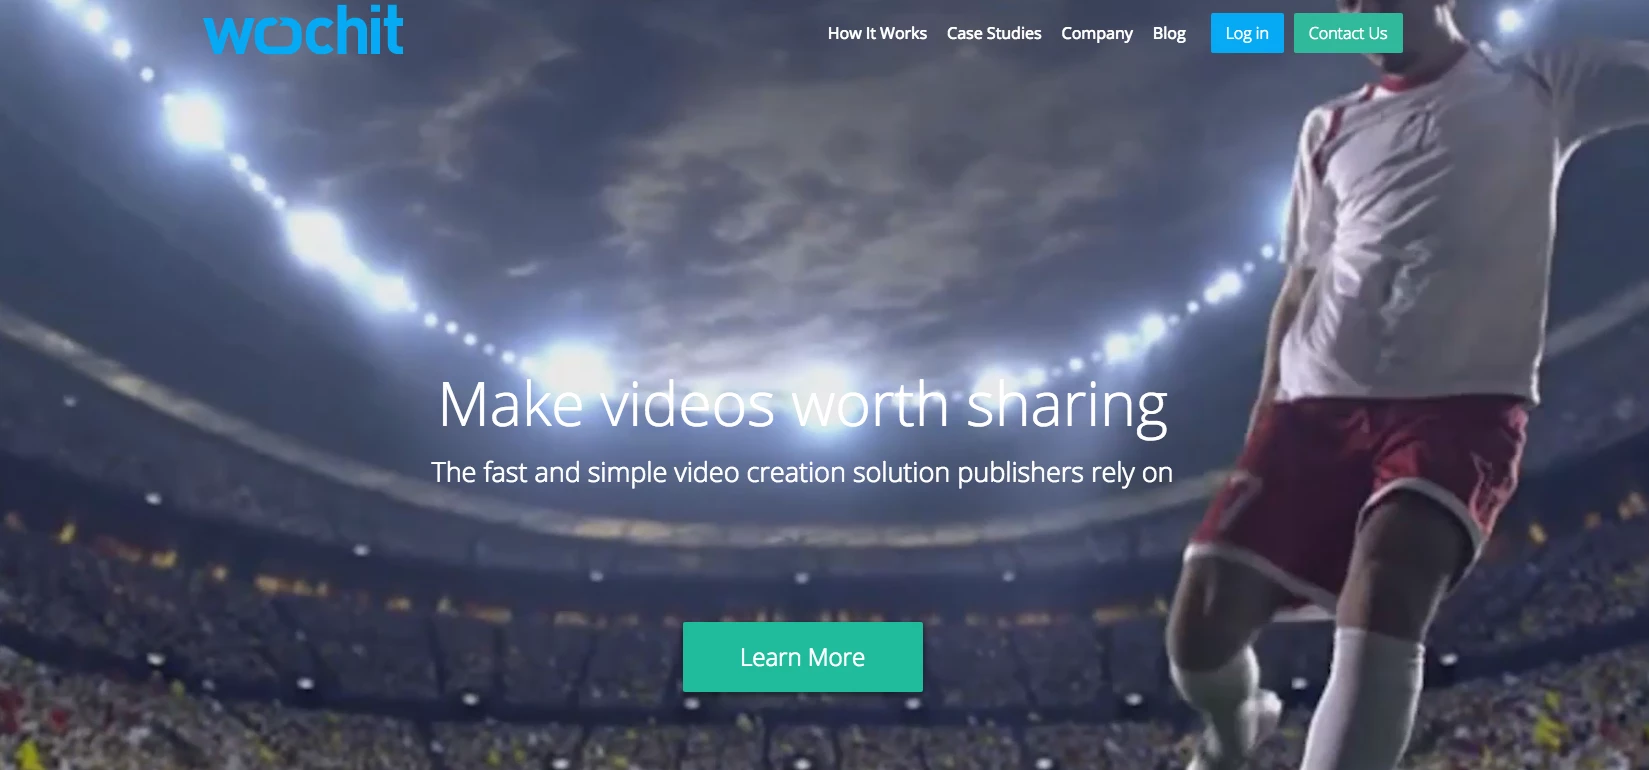 Video creation platform, Wochit, has secured $13m investment.